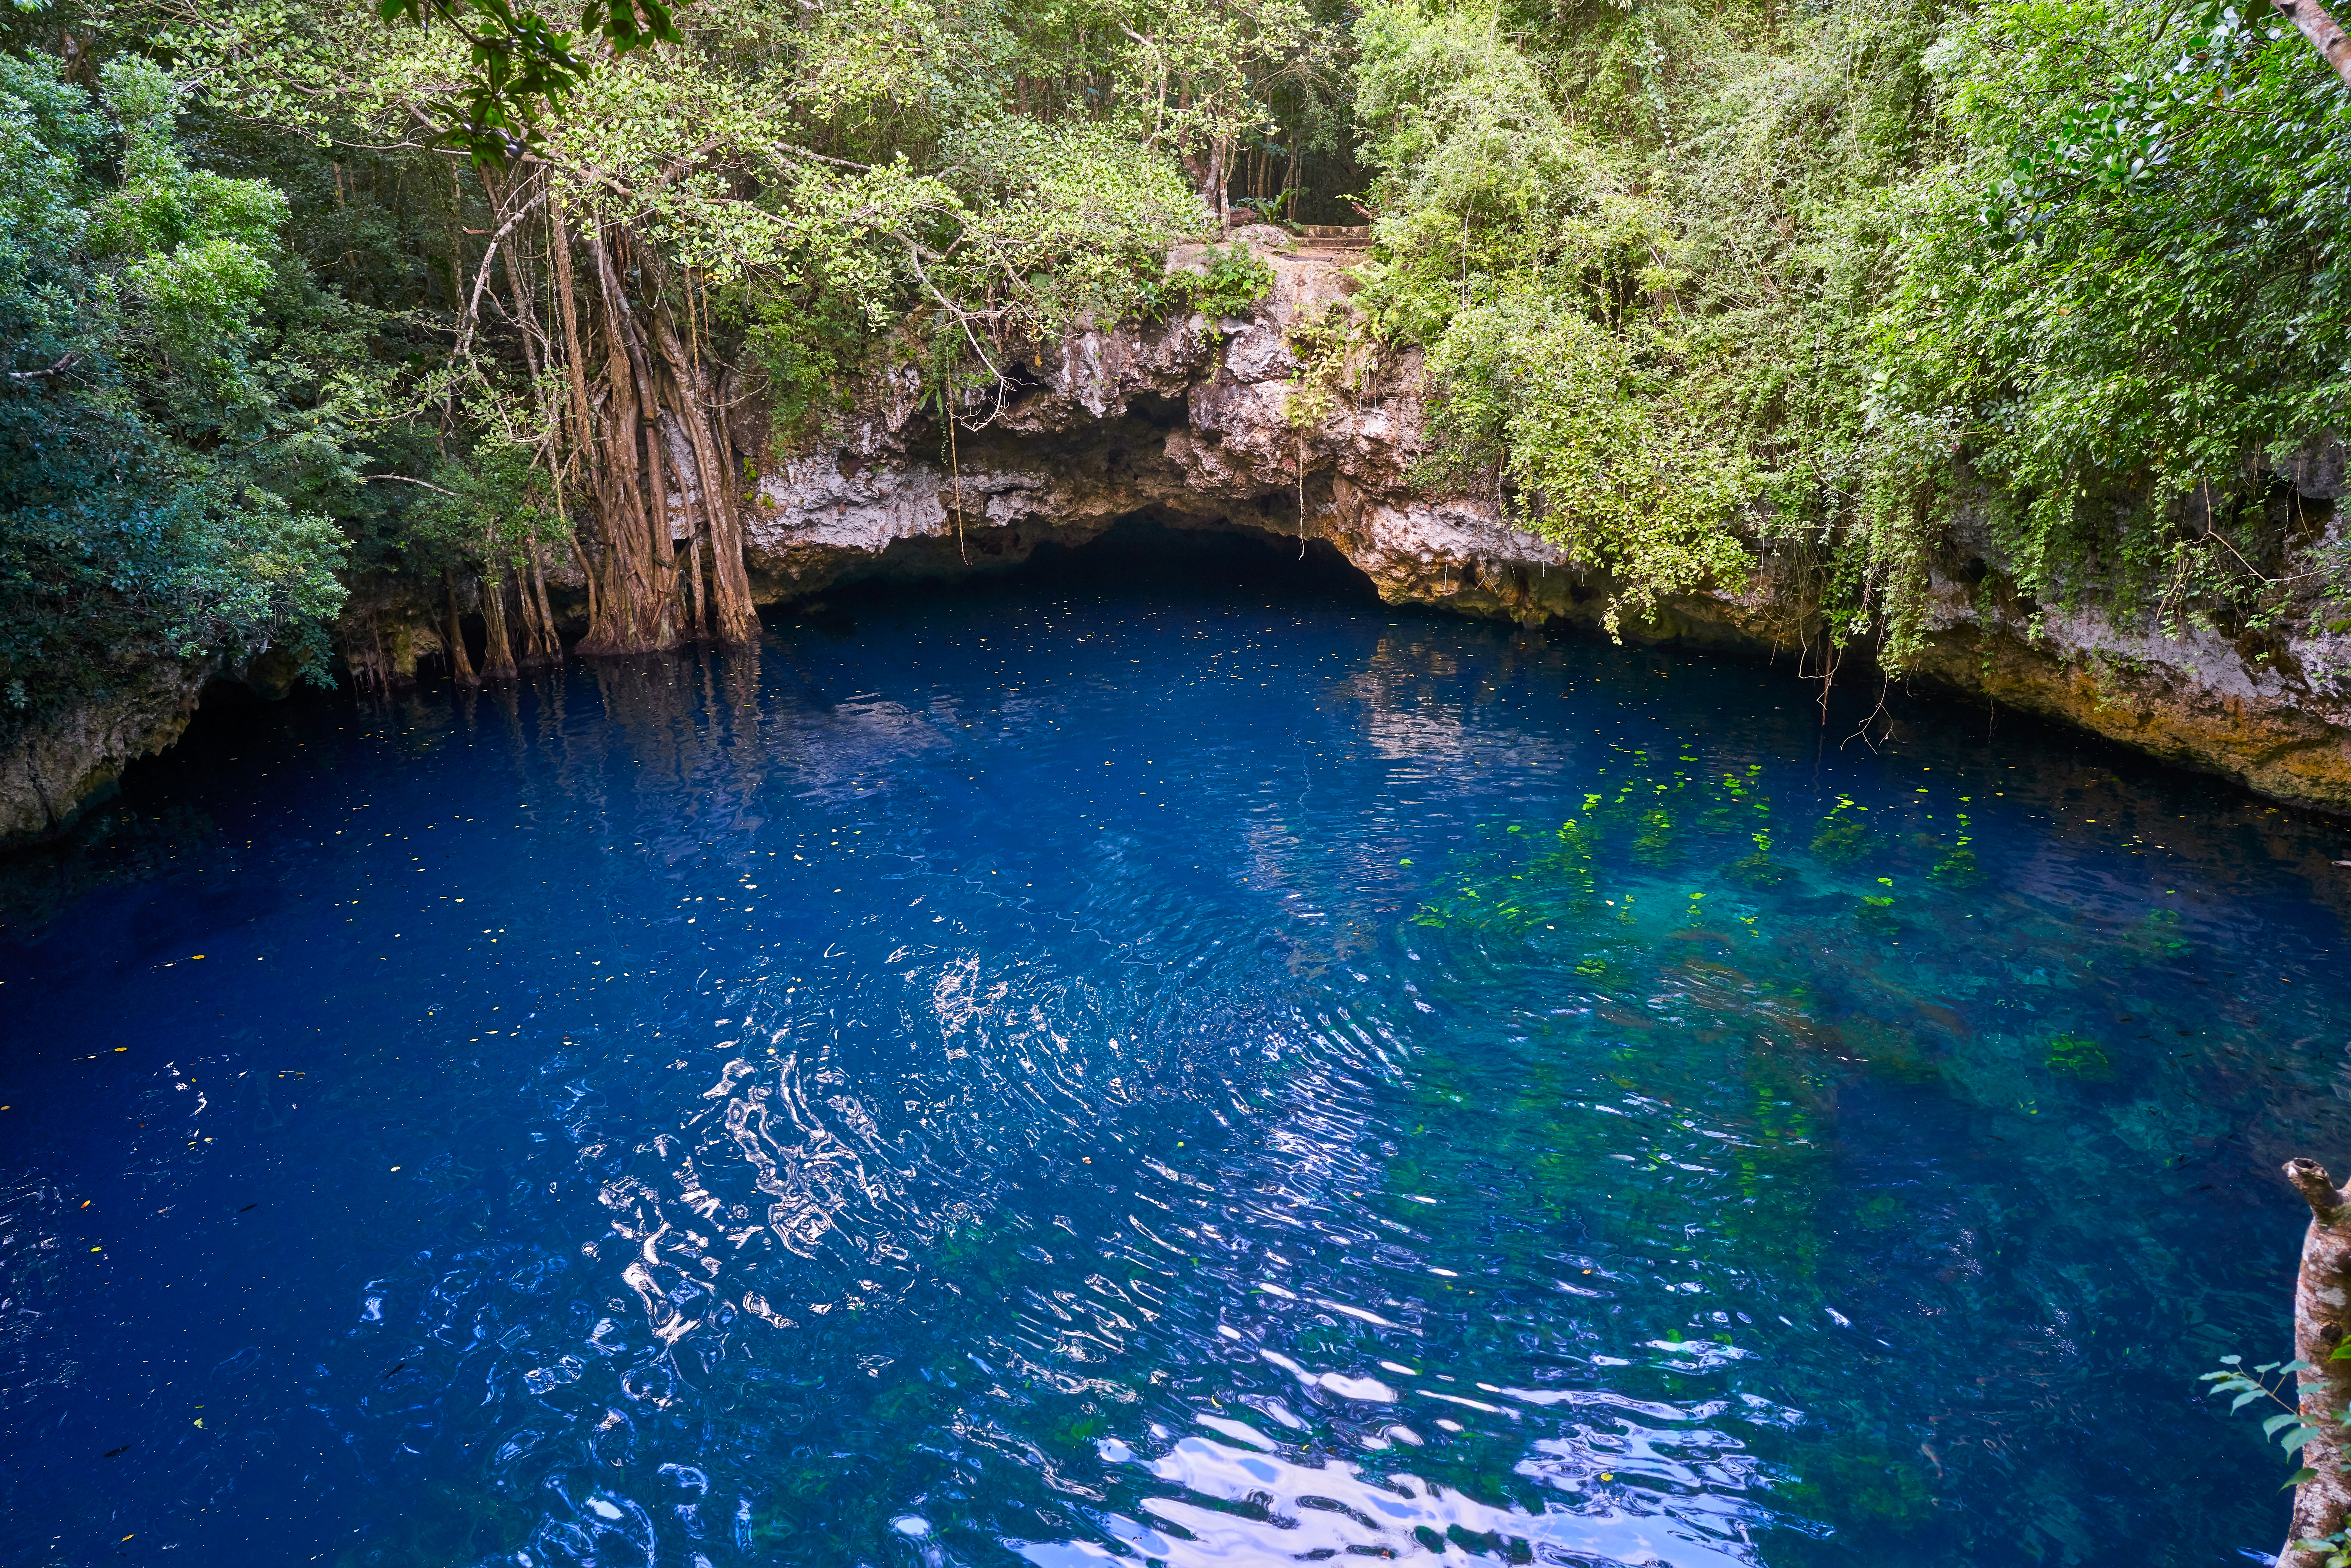 Cenote sinkhole in rainforest mayan jungle